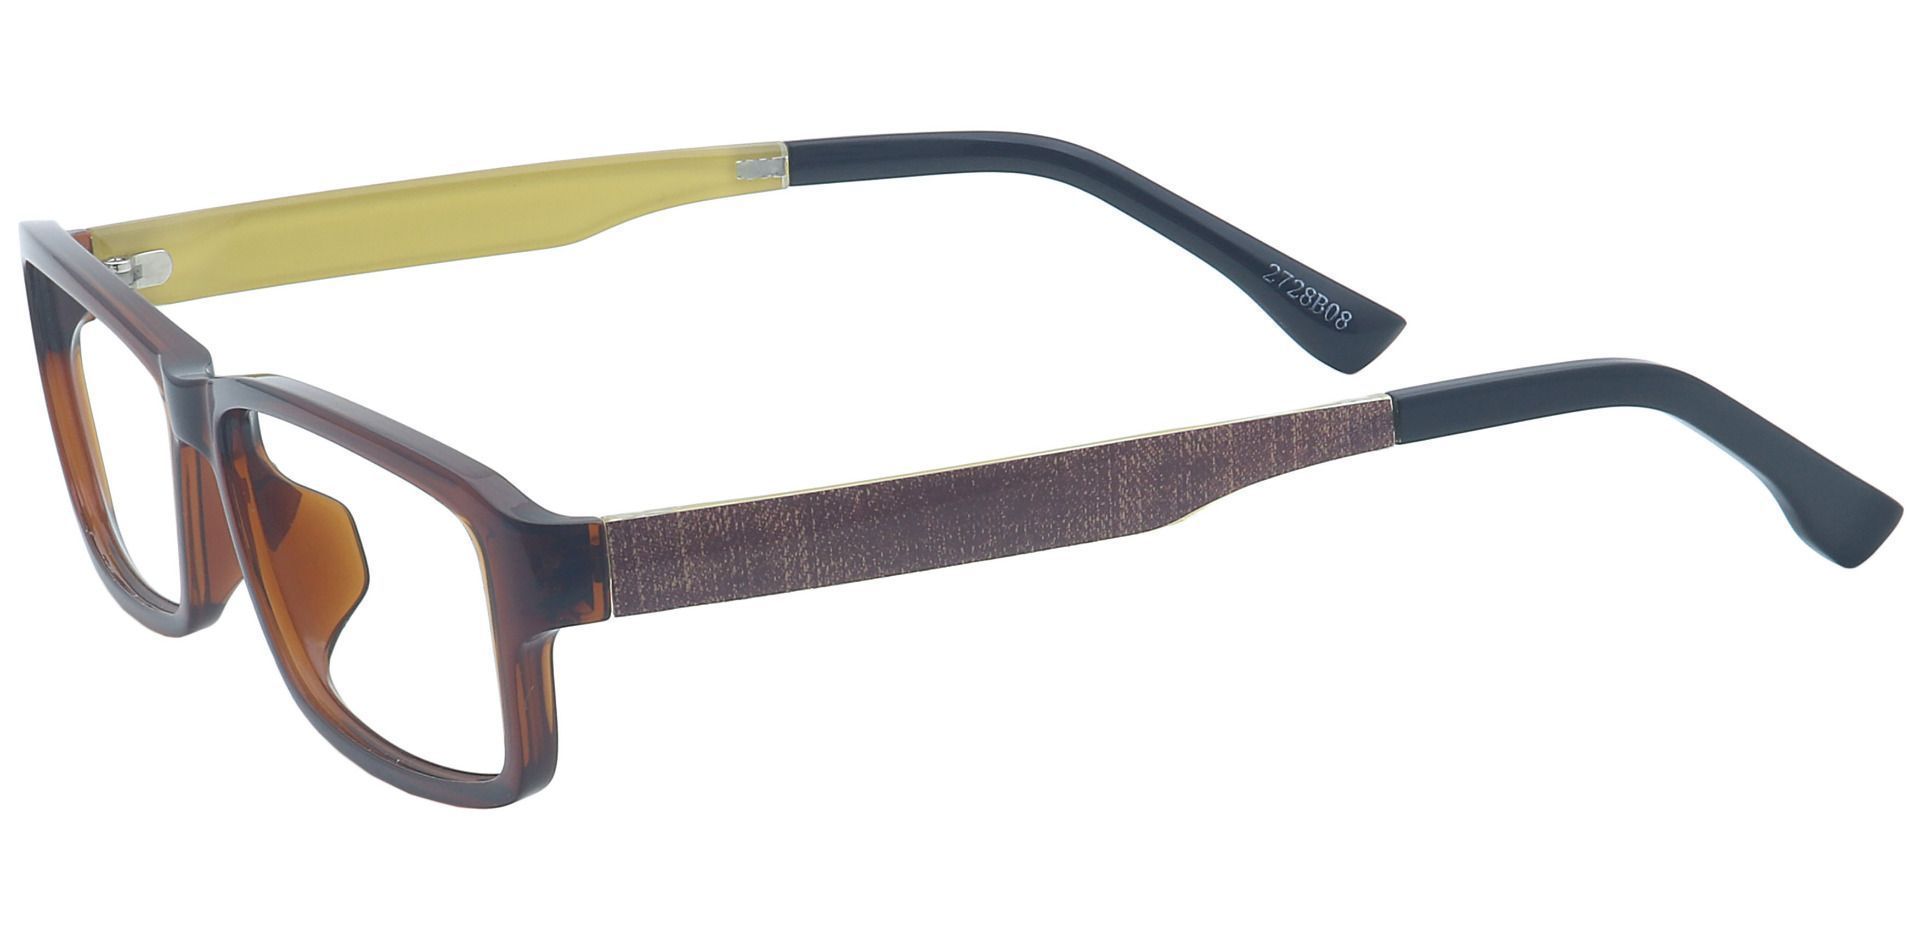 Denim Rectangle Eyeglasses Frame - Brown